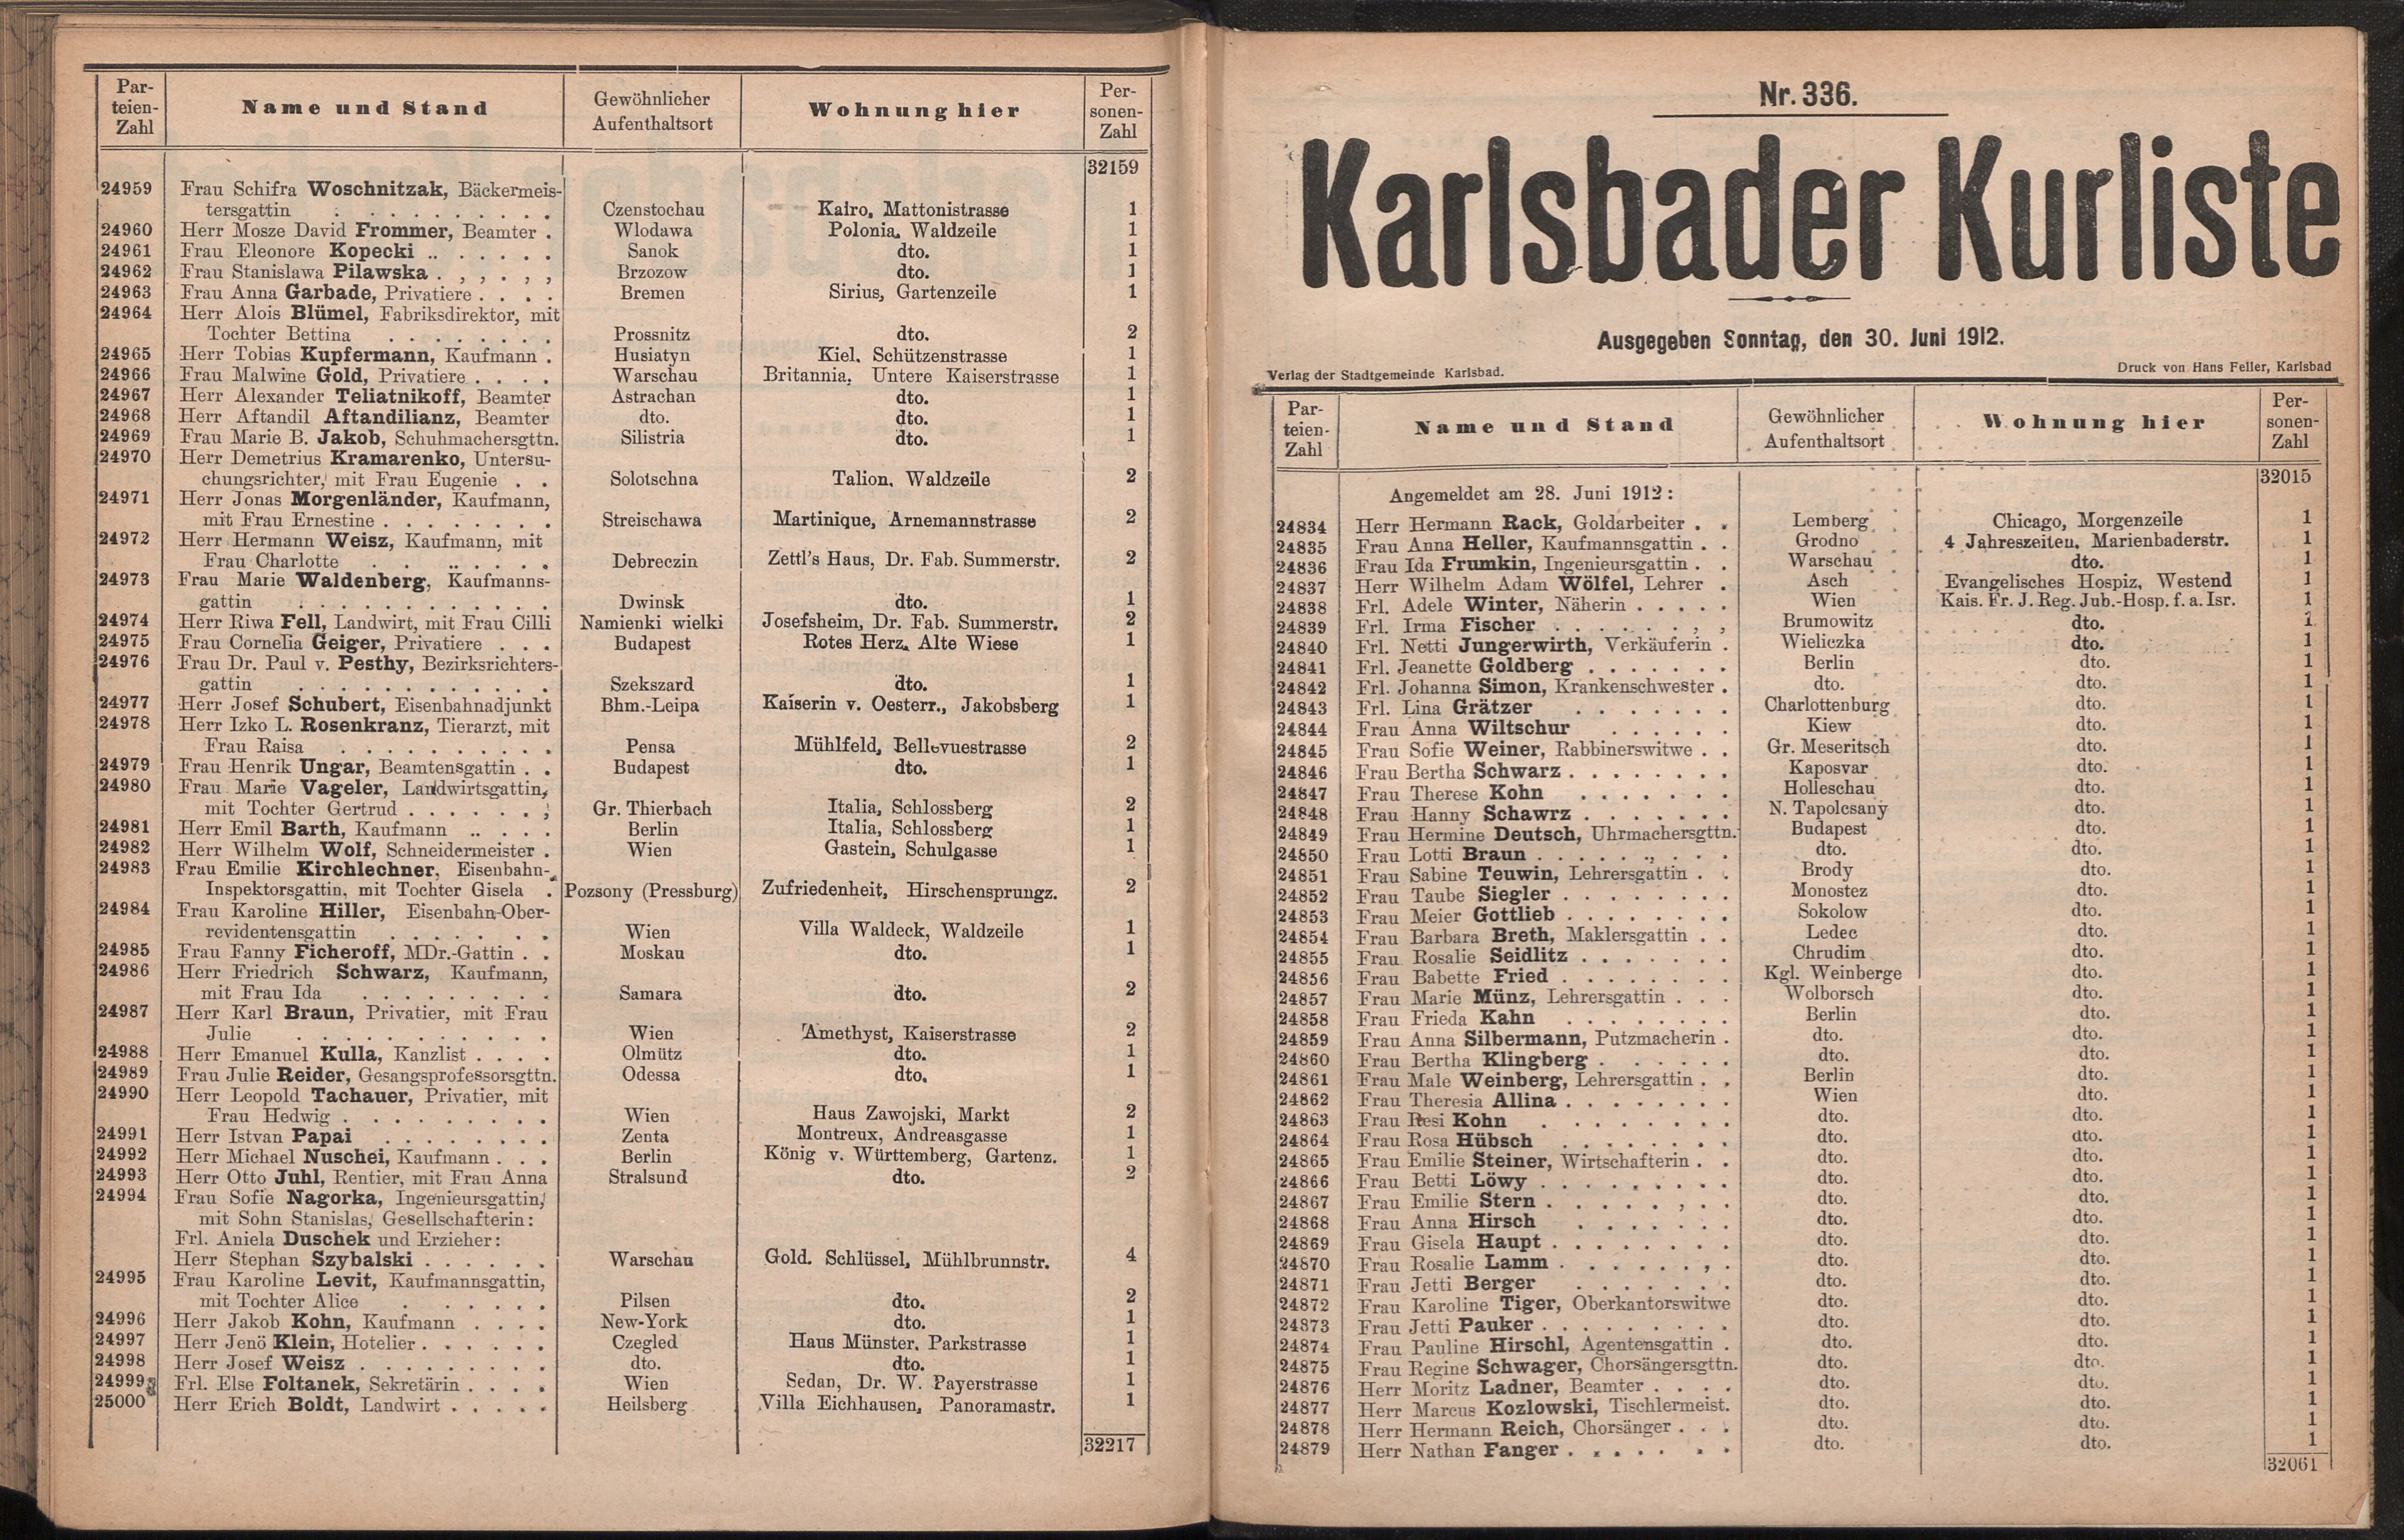 394. soap-kv_knihovna_karlsbader-kurliste-1912-1_3940